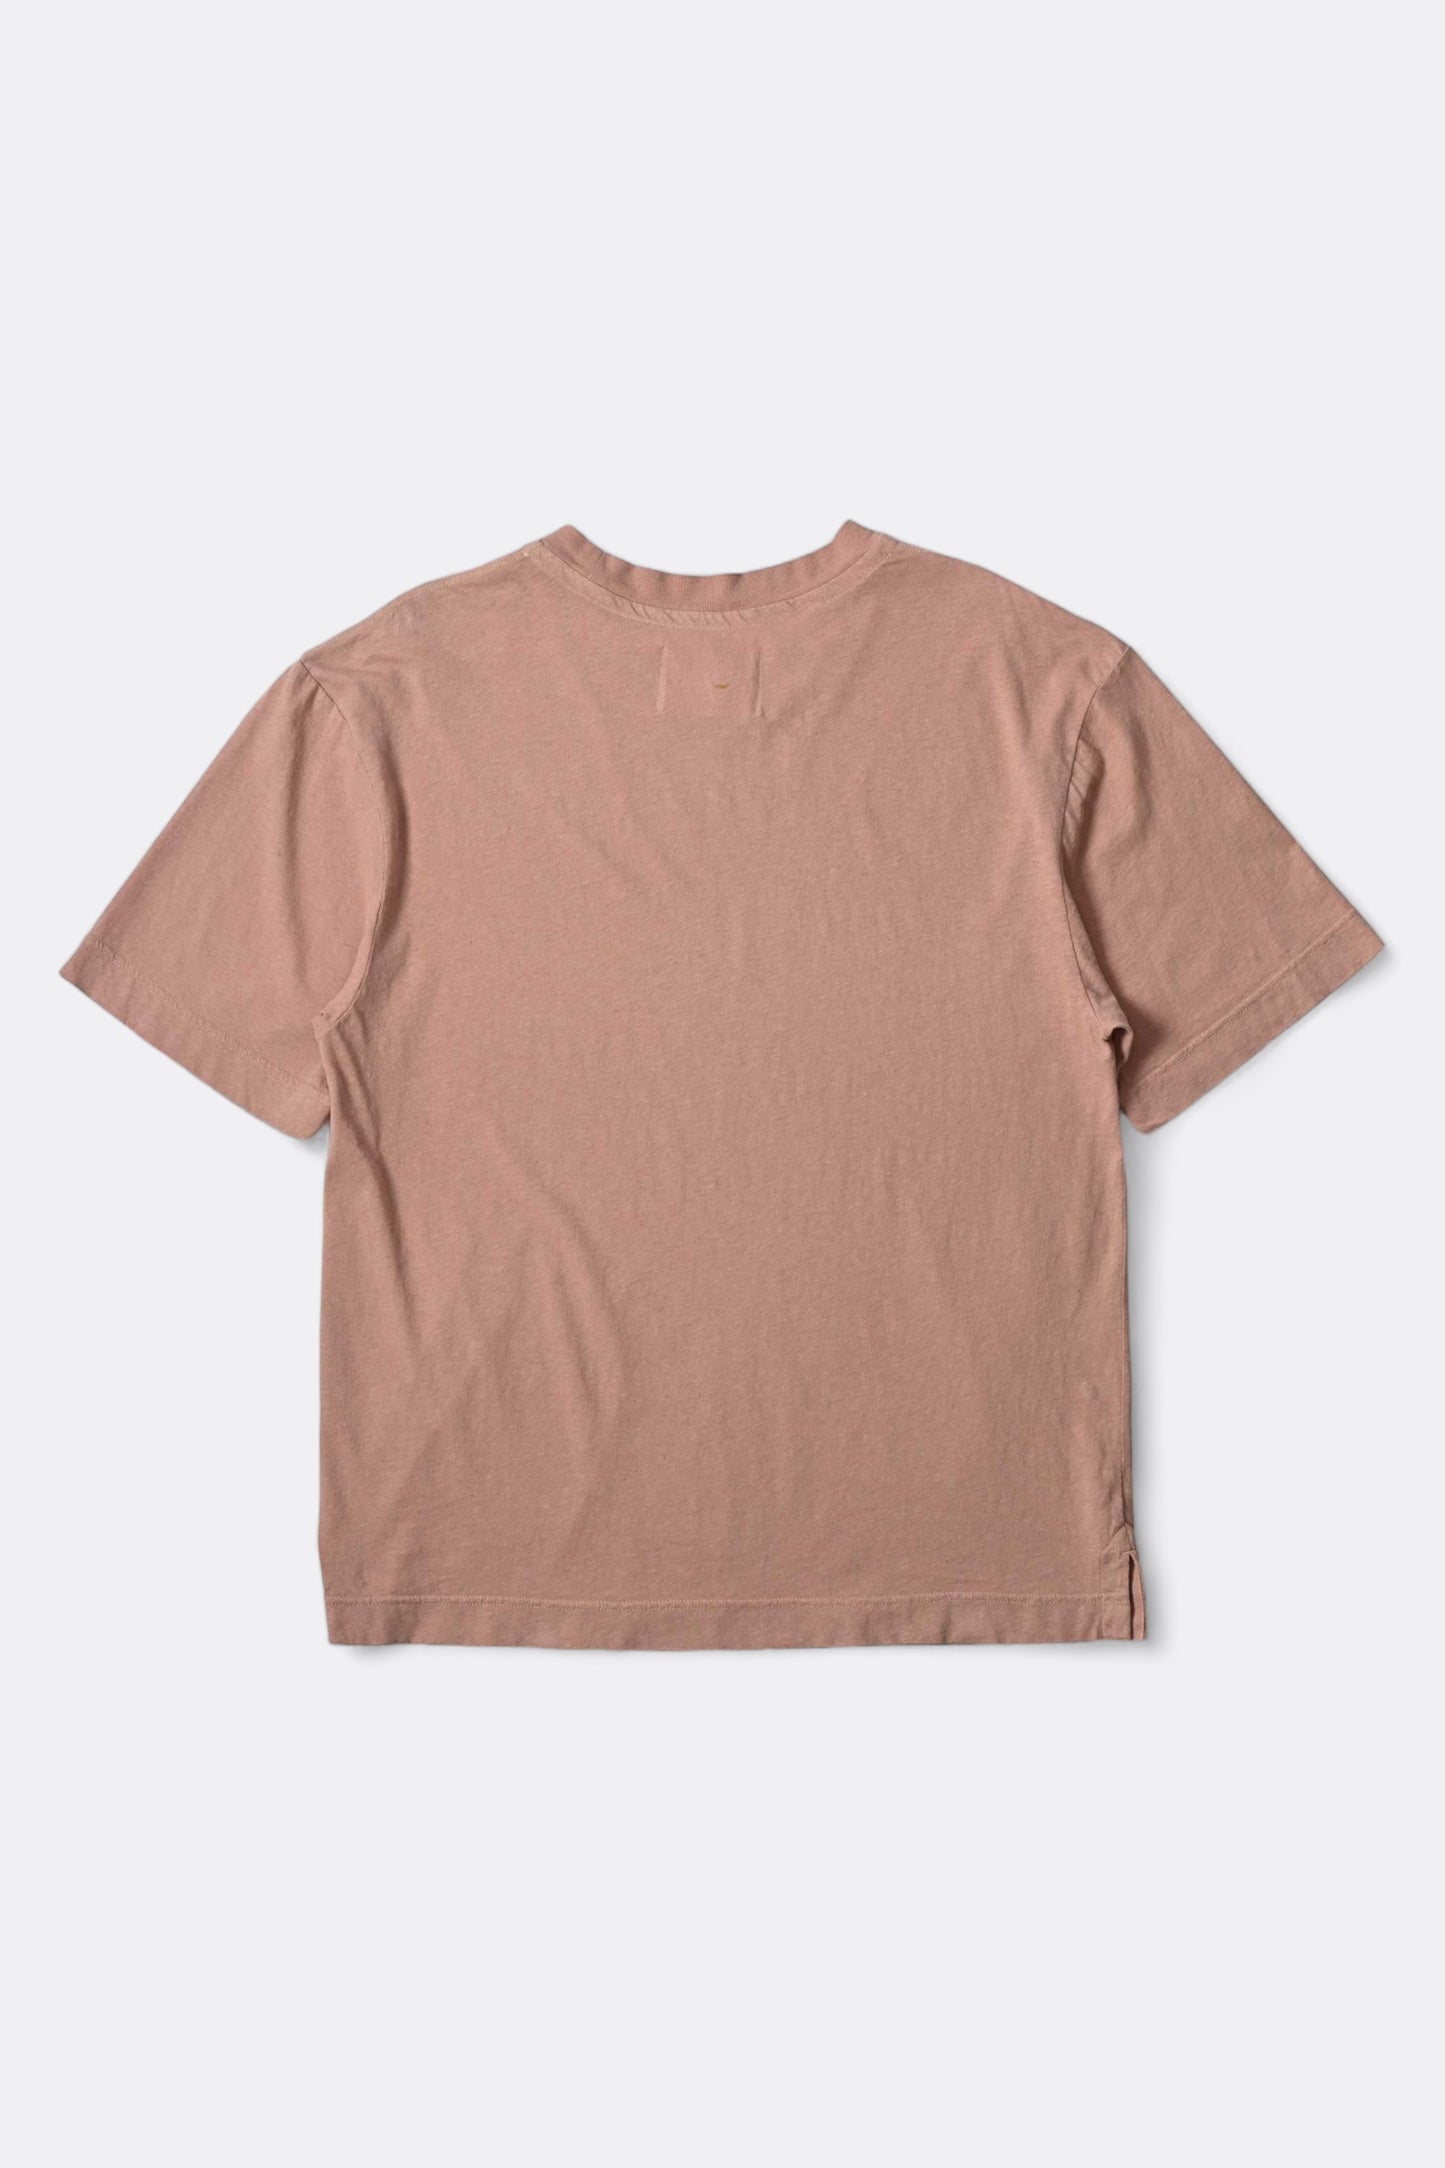 Margaret Howell - MHL. Simple T-Shirt Cotton Linen Jersey (Pale Pink)